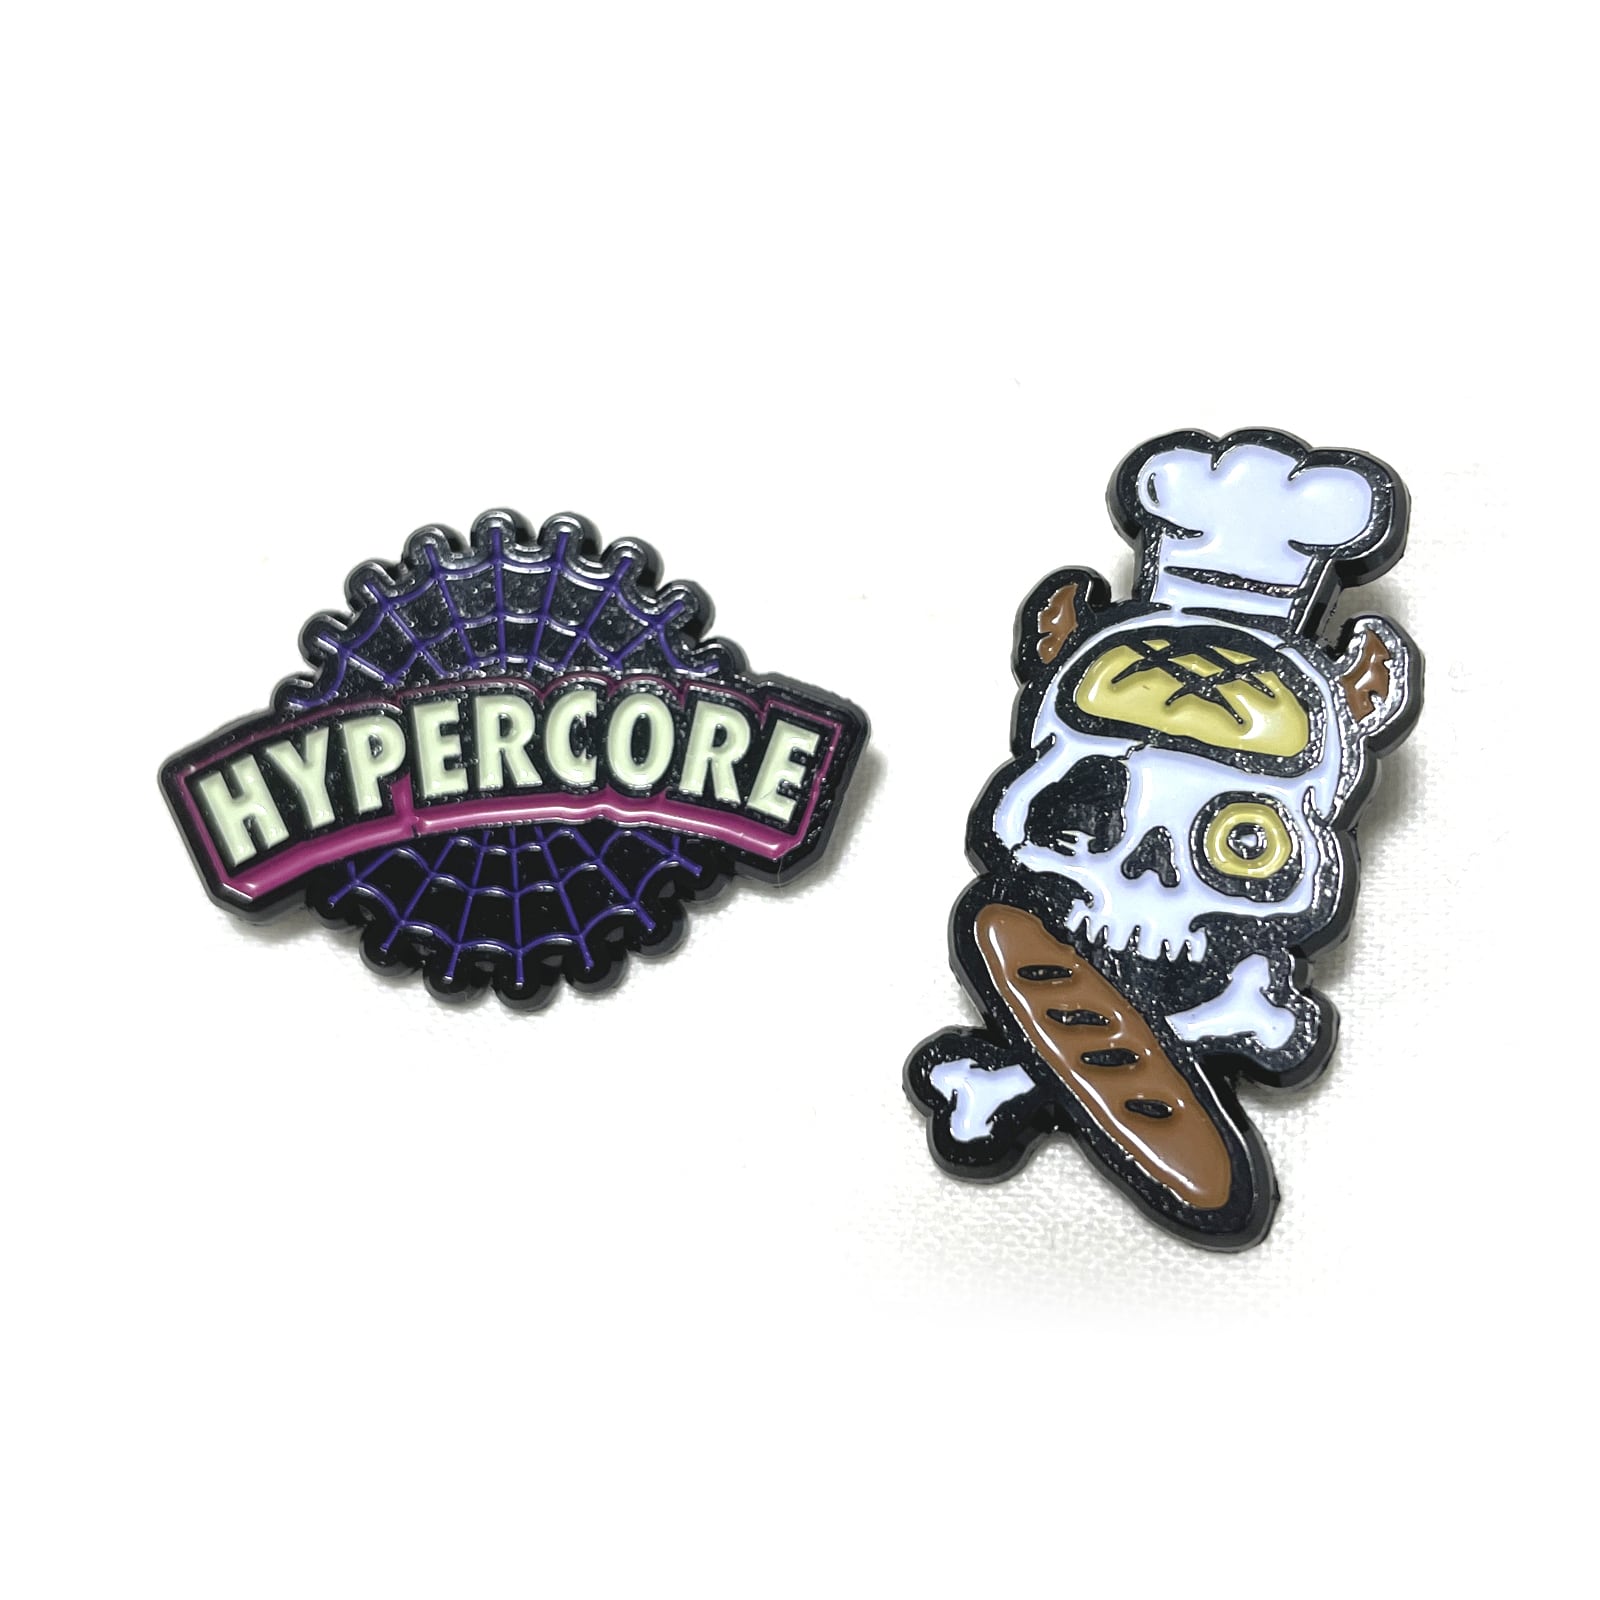 Hypercore Spider Logo Pin